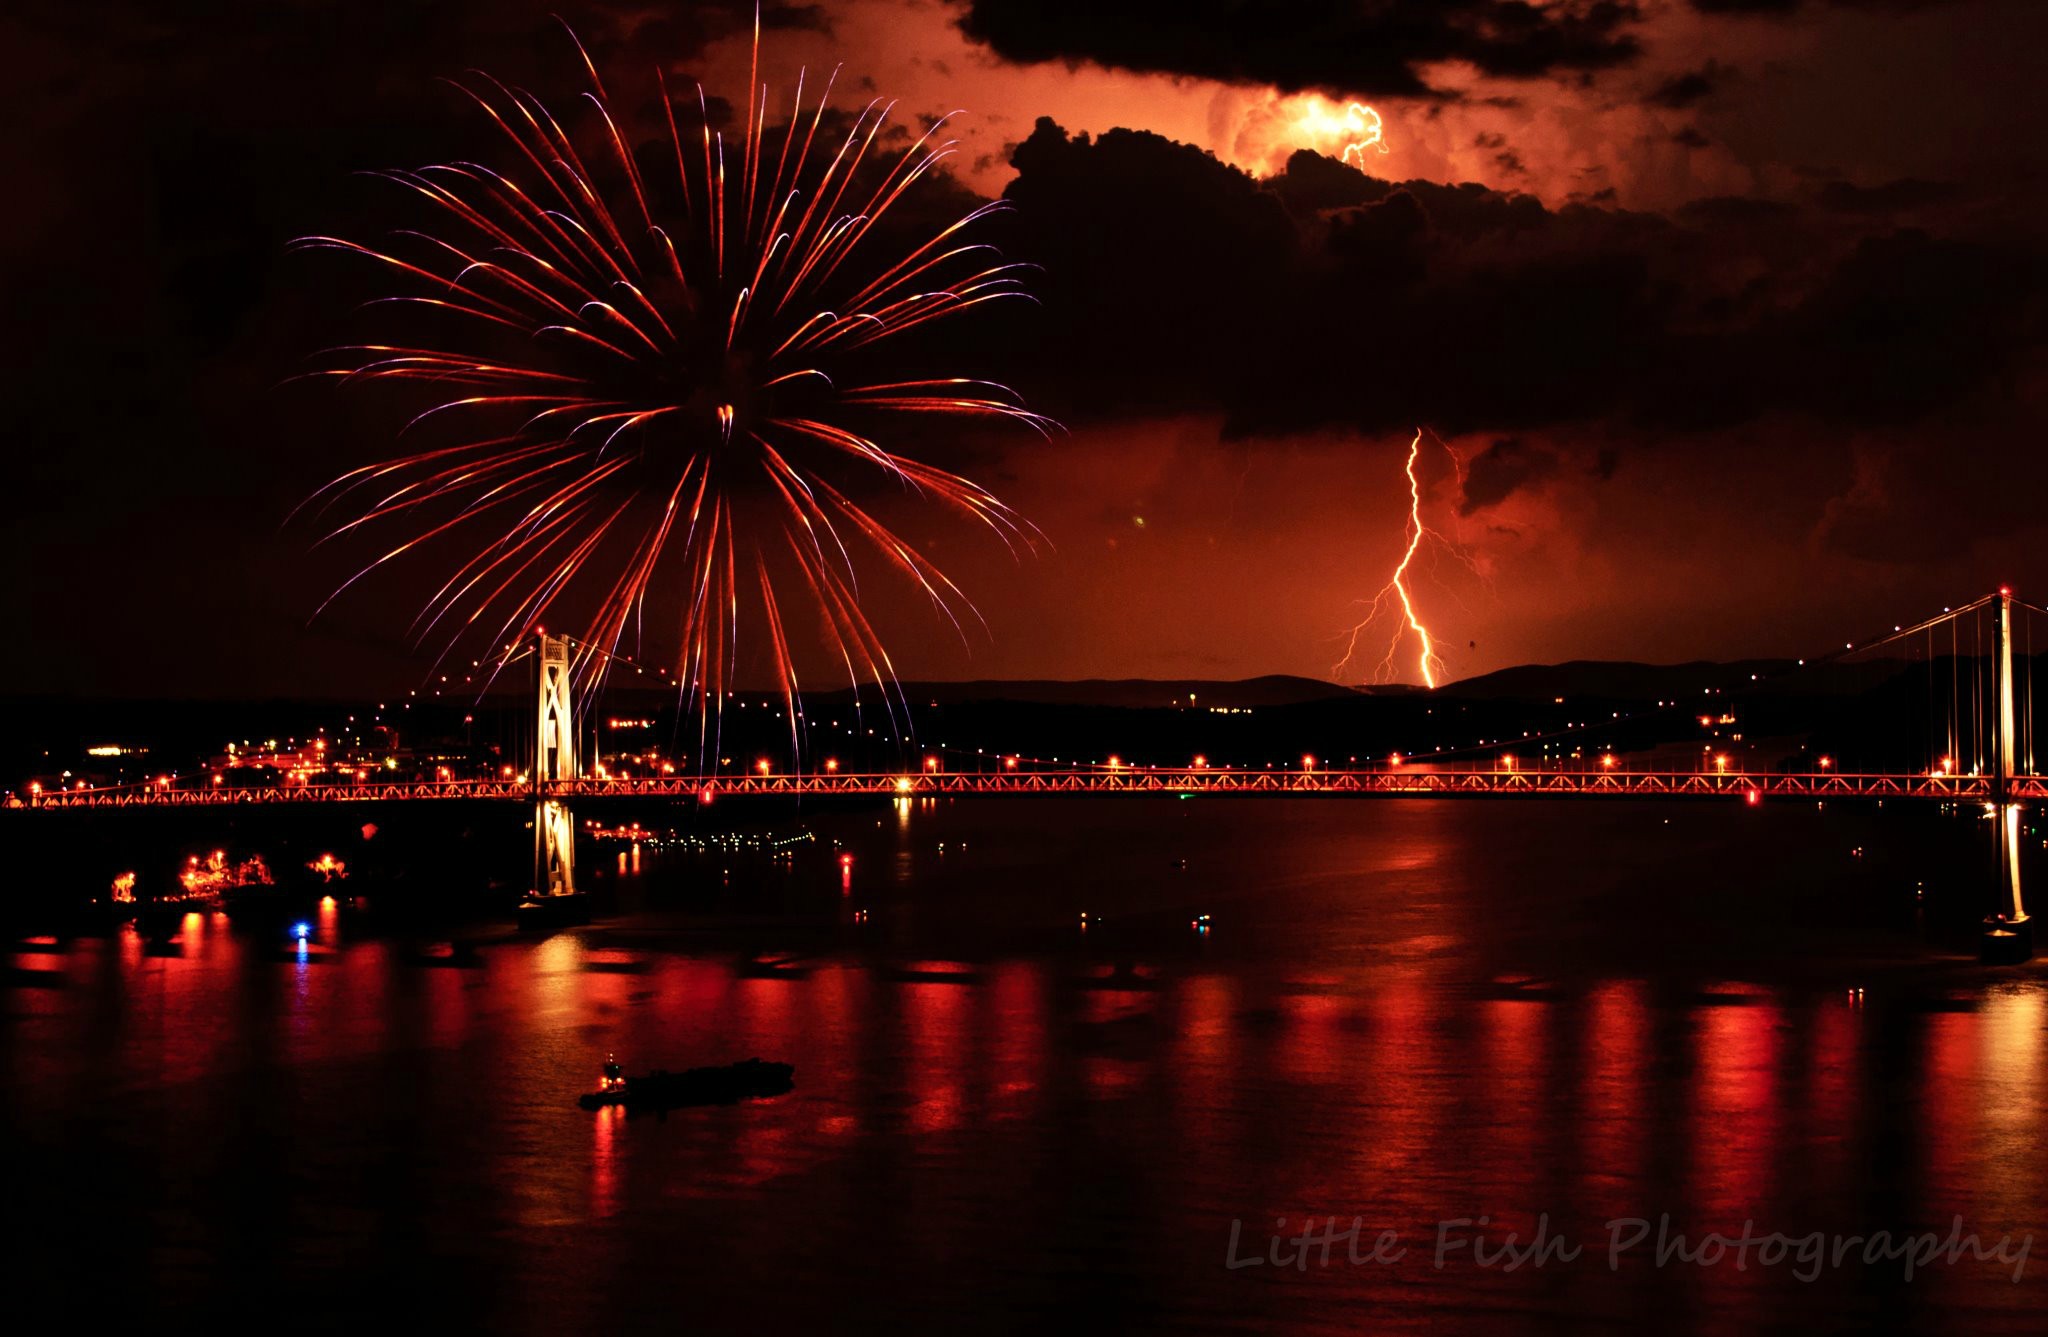 lightning bolt fireworks - Ain .Mn Intima Mananananan Anima Veniam Iniai Little Fish Photography